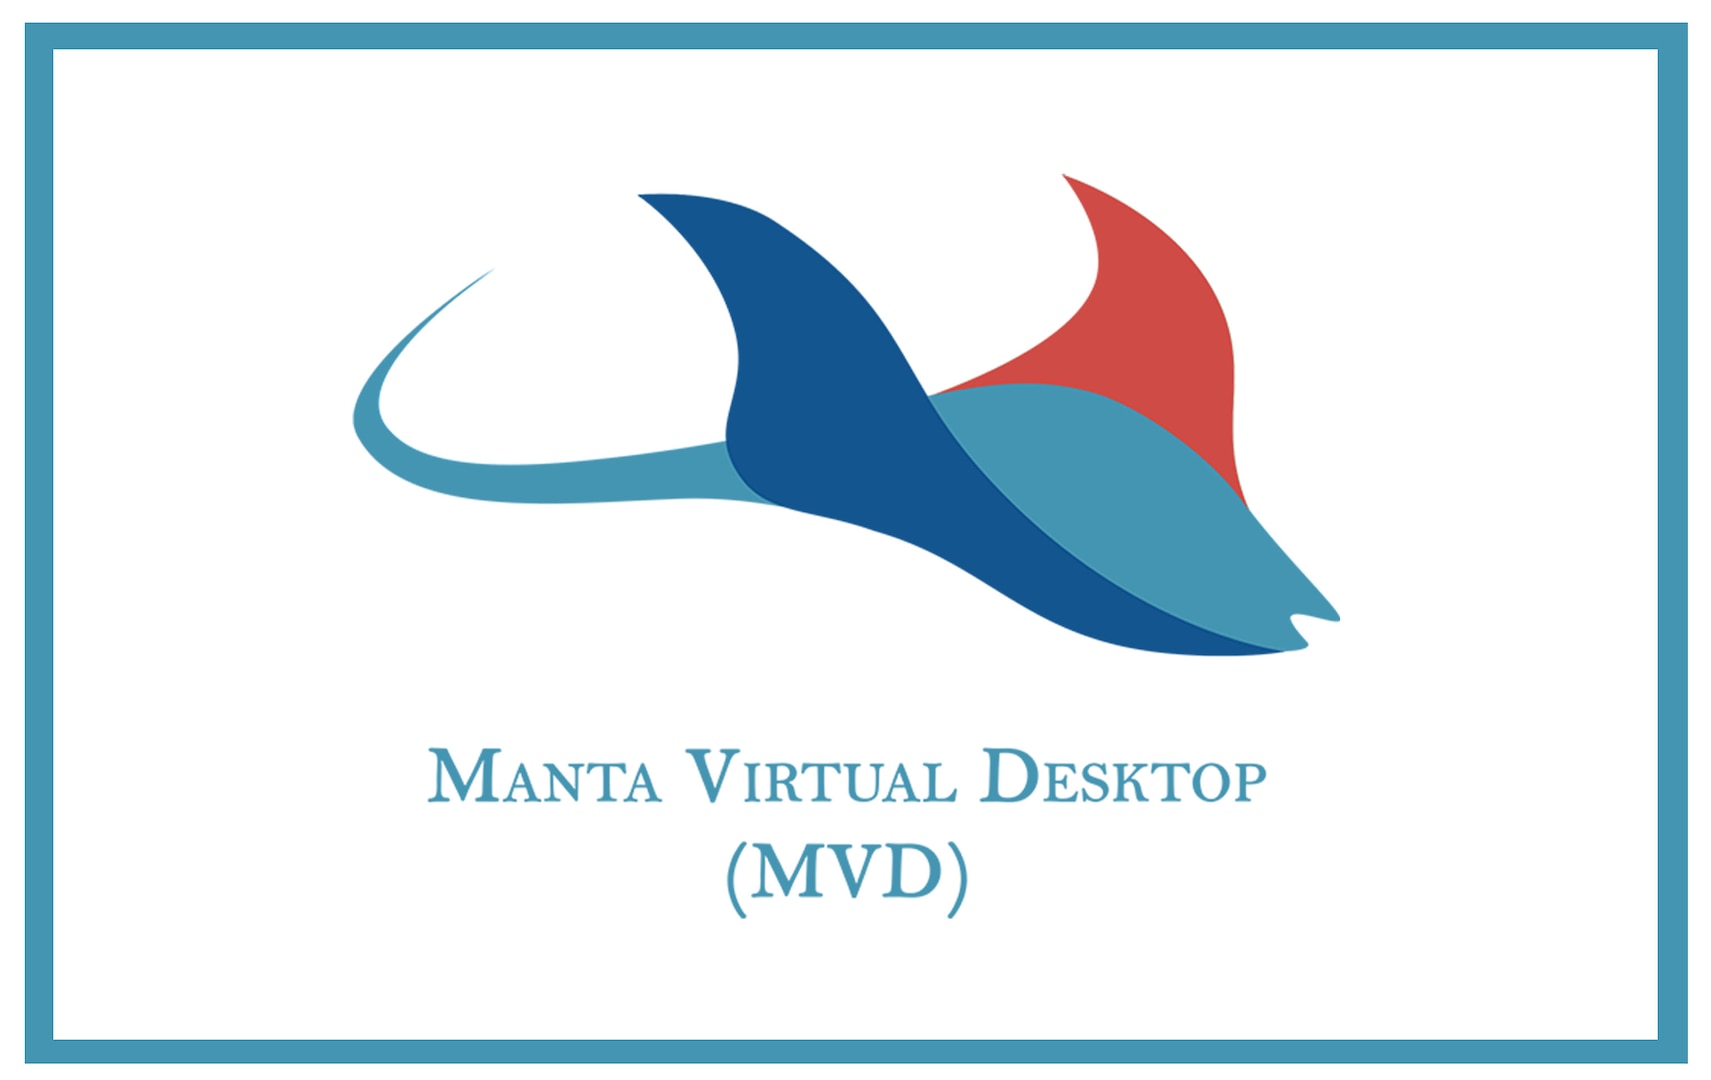 Manta Virtual Desktop logo